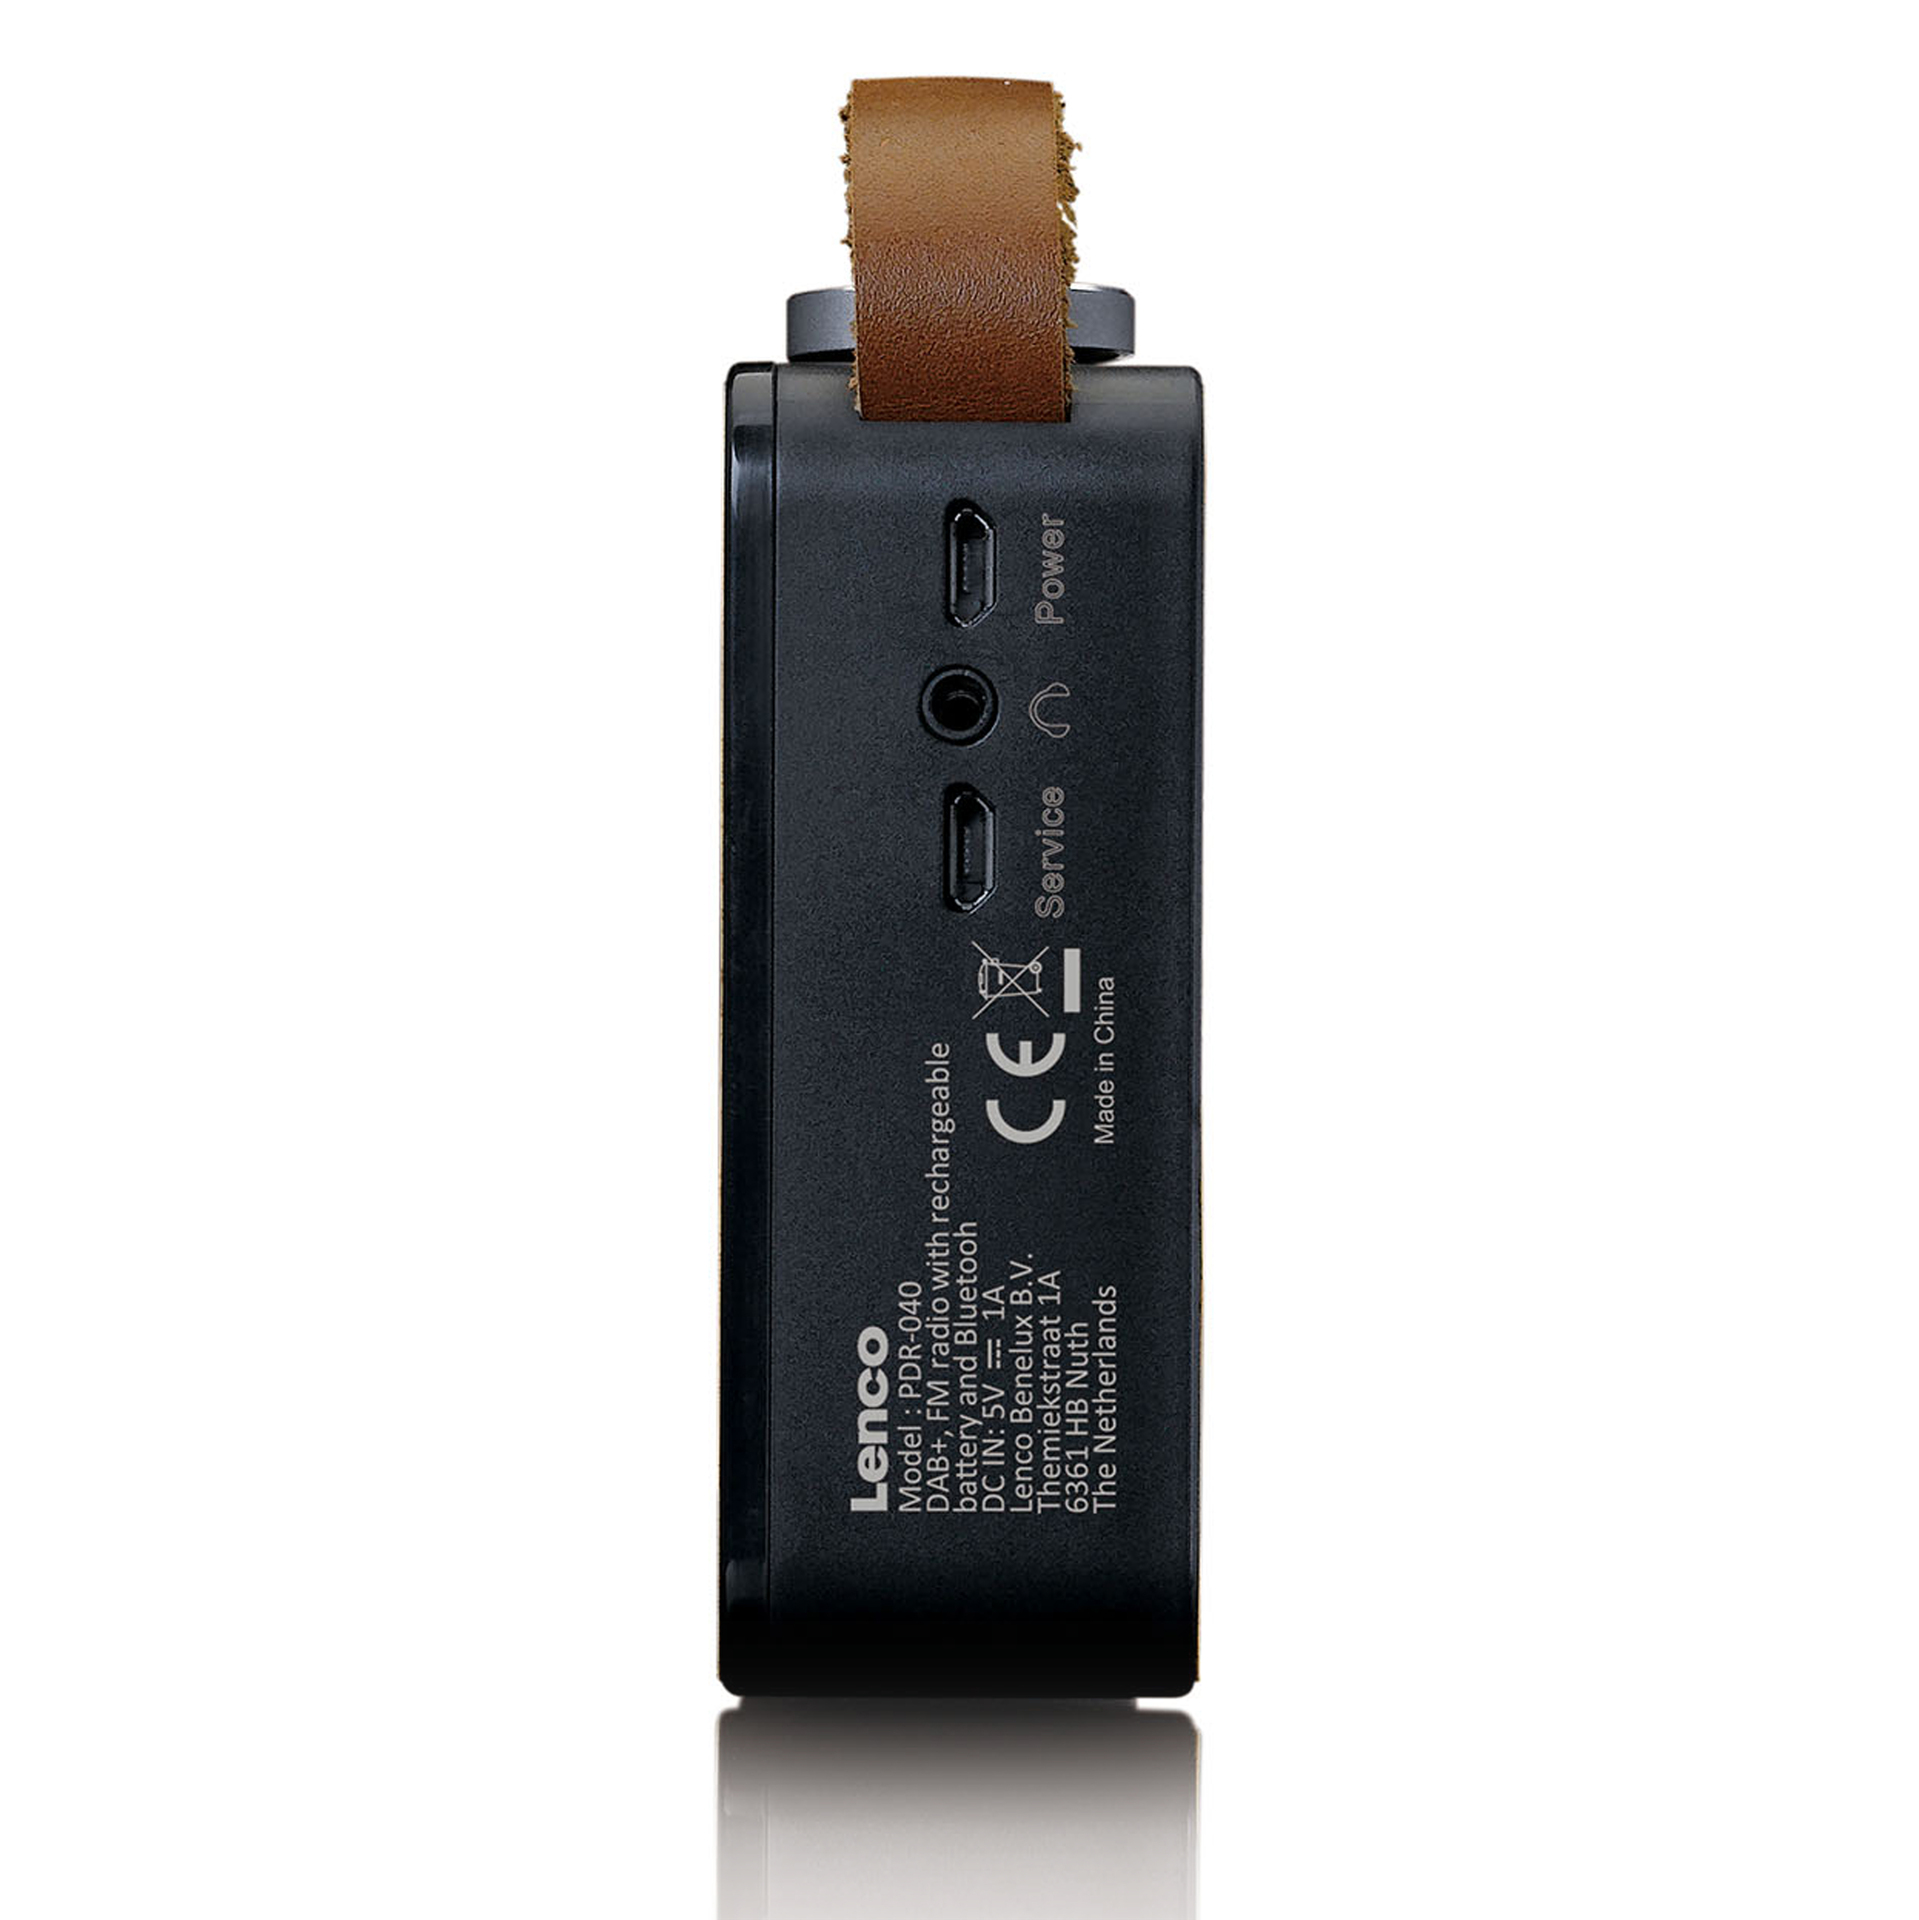 LENCO tragbares DAB+/ FM Radio schwarz aus echtem Bambus 3 Watt Bluetooth  5.0 \